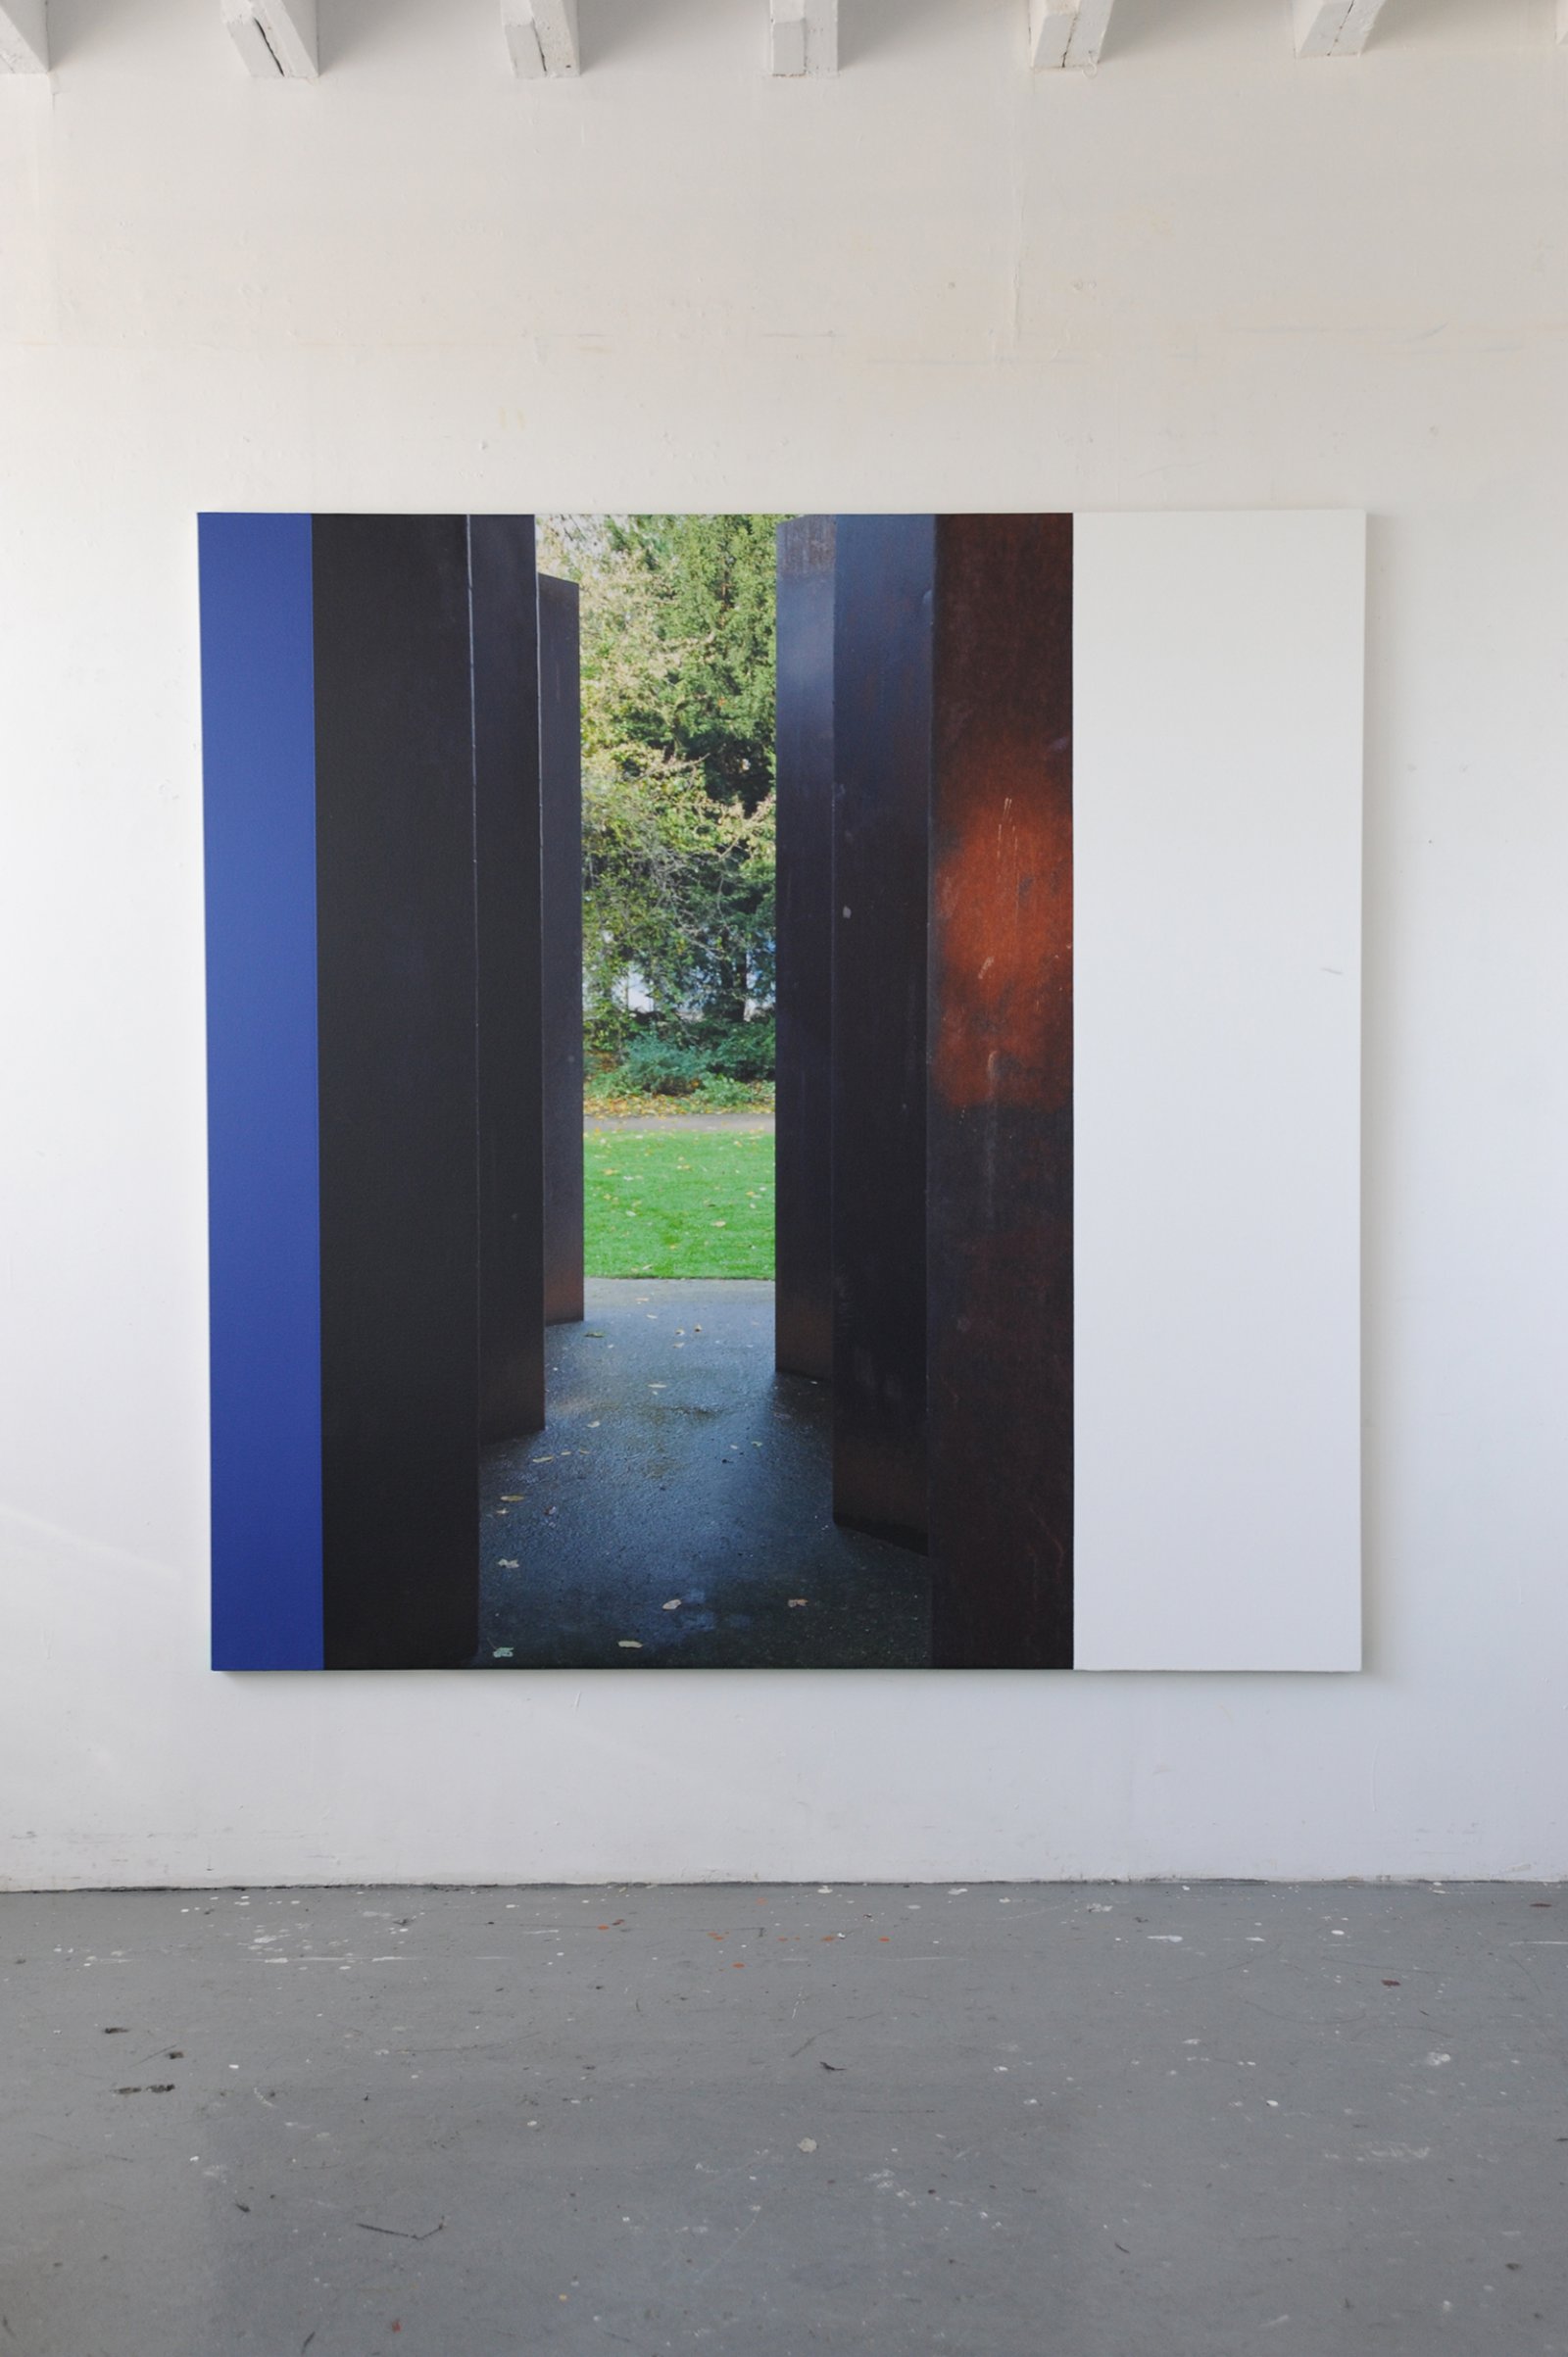 Ian Wallace, Conundrum I (Zim Zum), 2009, photolaminate and acrylic on canvas, 72 x 72 in. (183 x 183 cm)